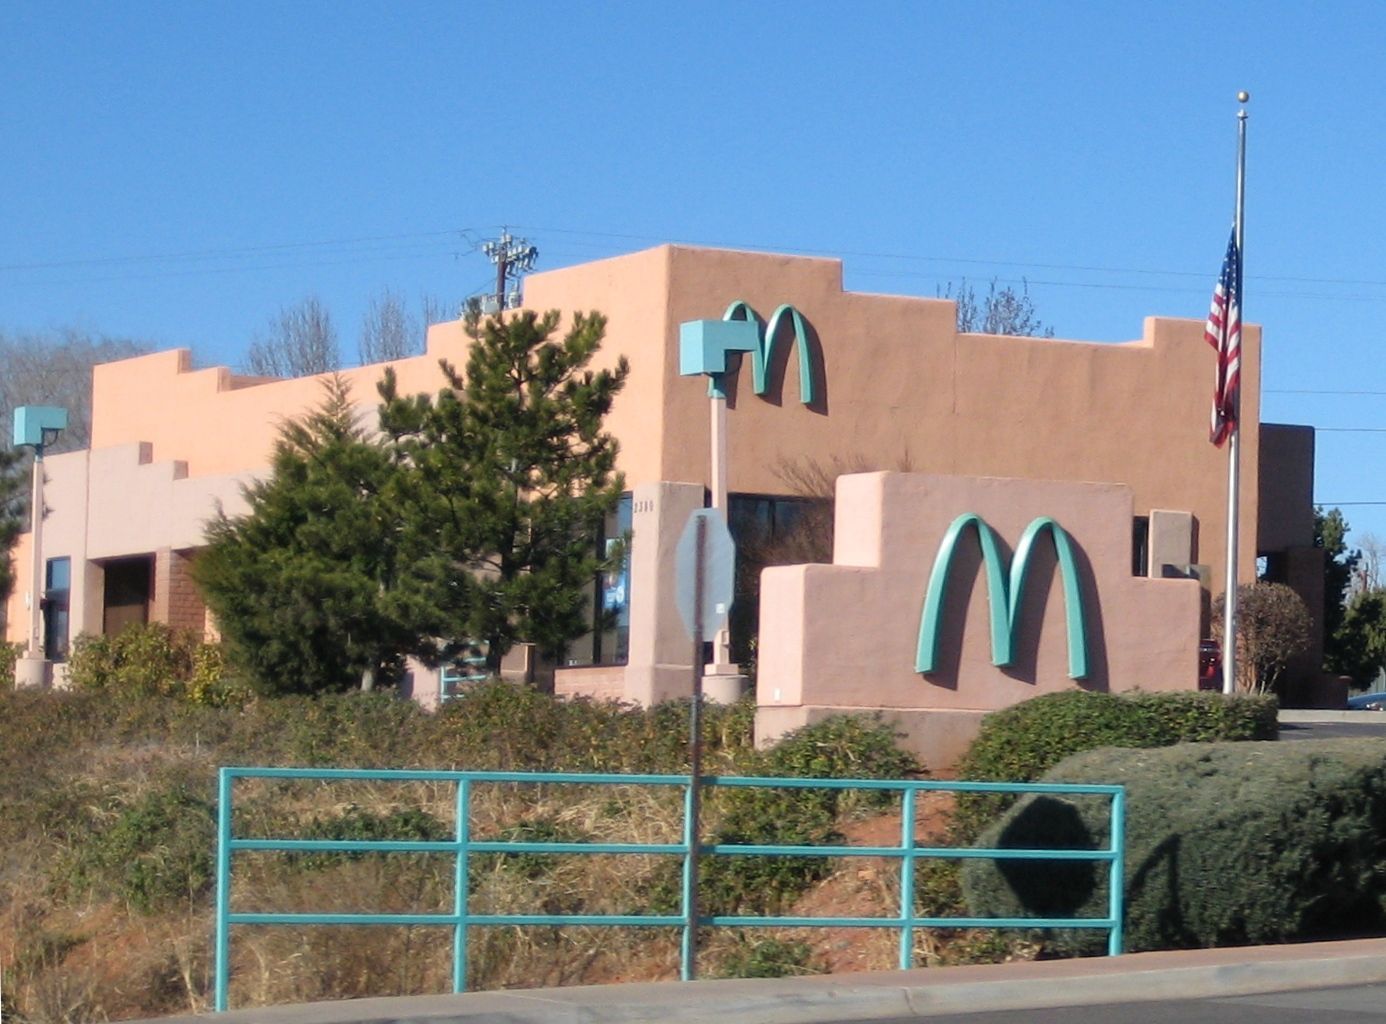 World's First Teal McDonald's Arches: world record in Sedona, Arizona